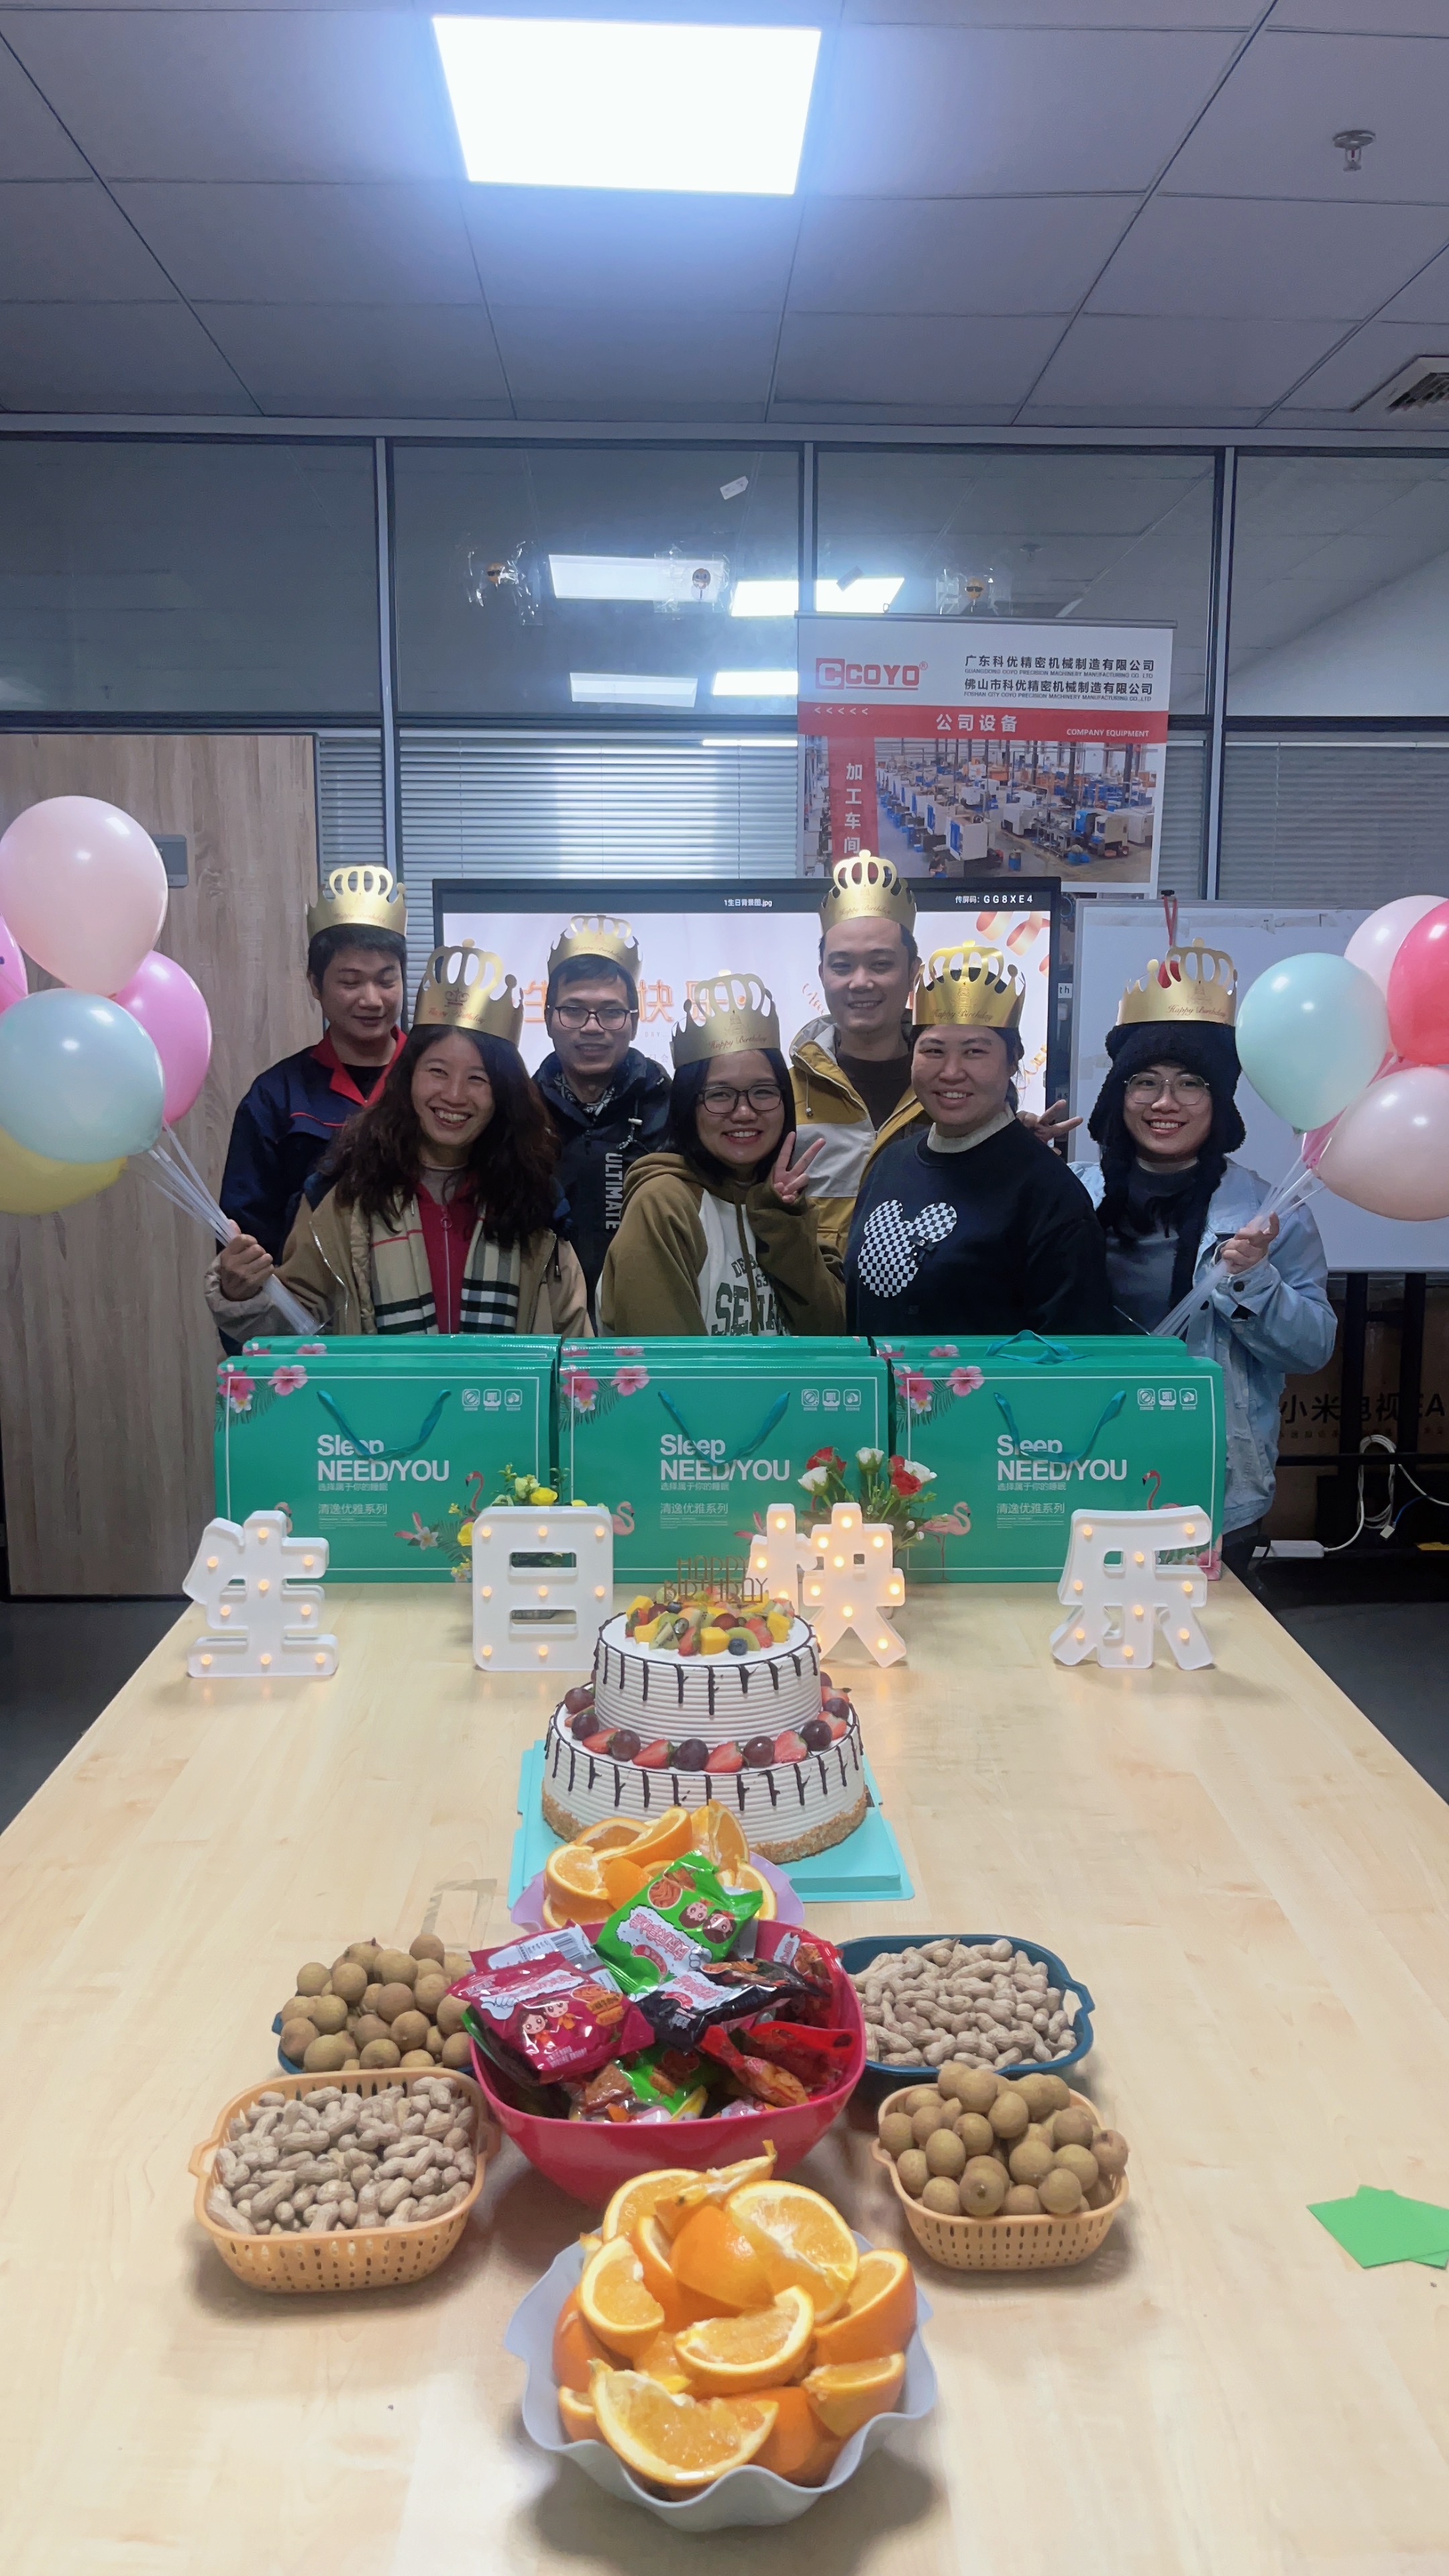 COYO fourth quarter employee birthday party